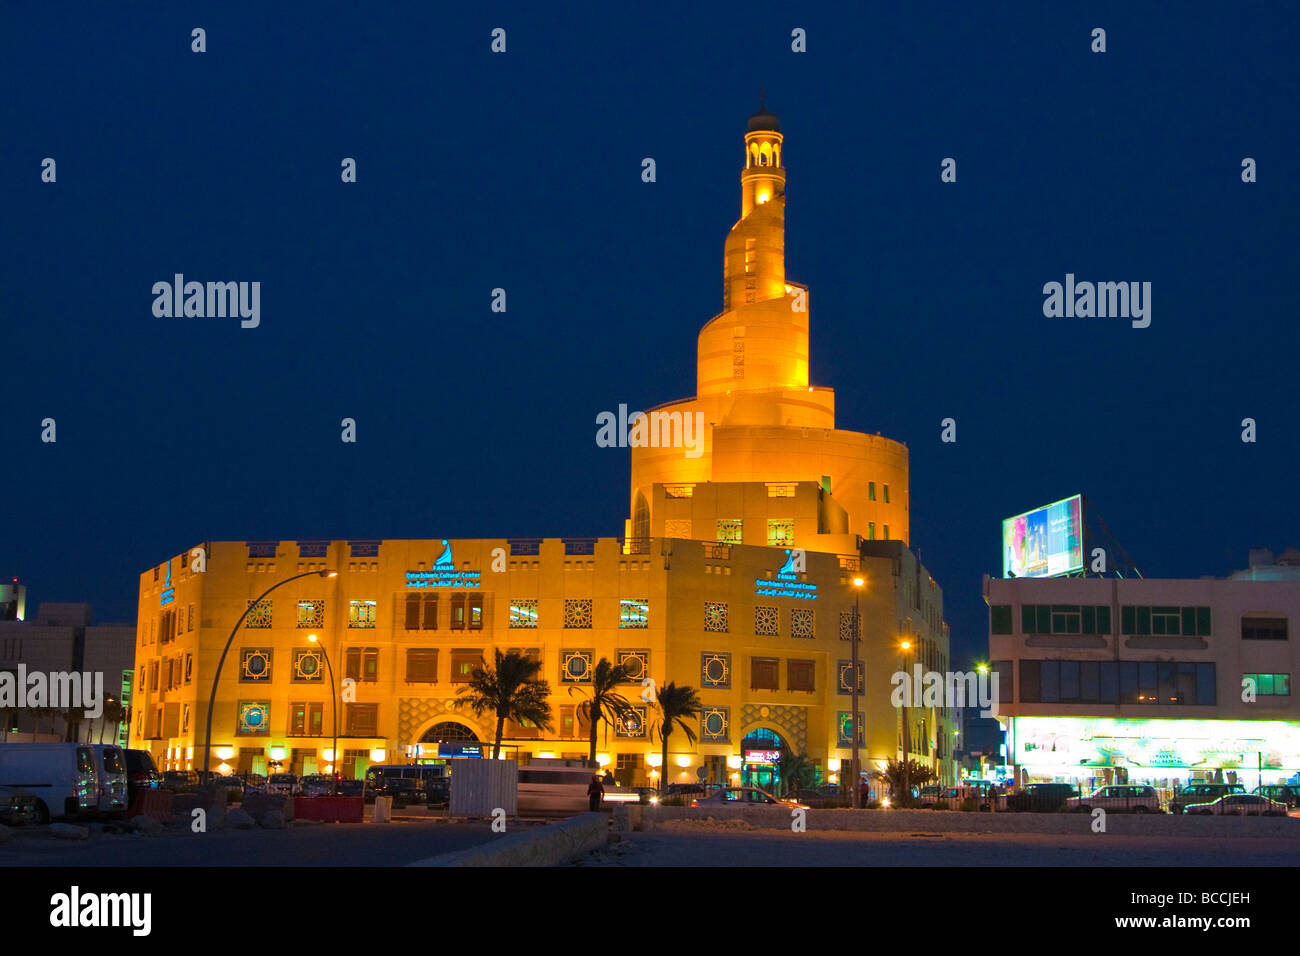 Doha, Qatar. Kassem Darwish Fakhroo Center, sede del Centro Cultural Islámico de Qatar. Una escena nocturna. Foto de stock